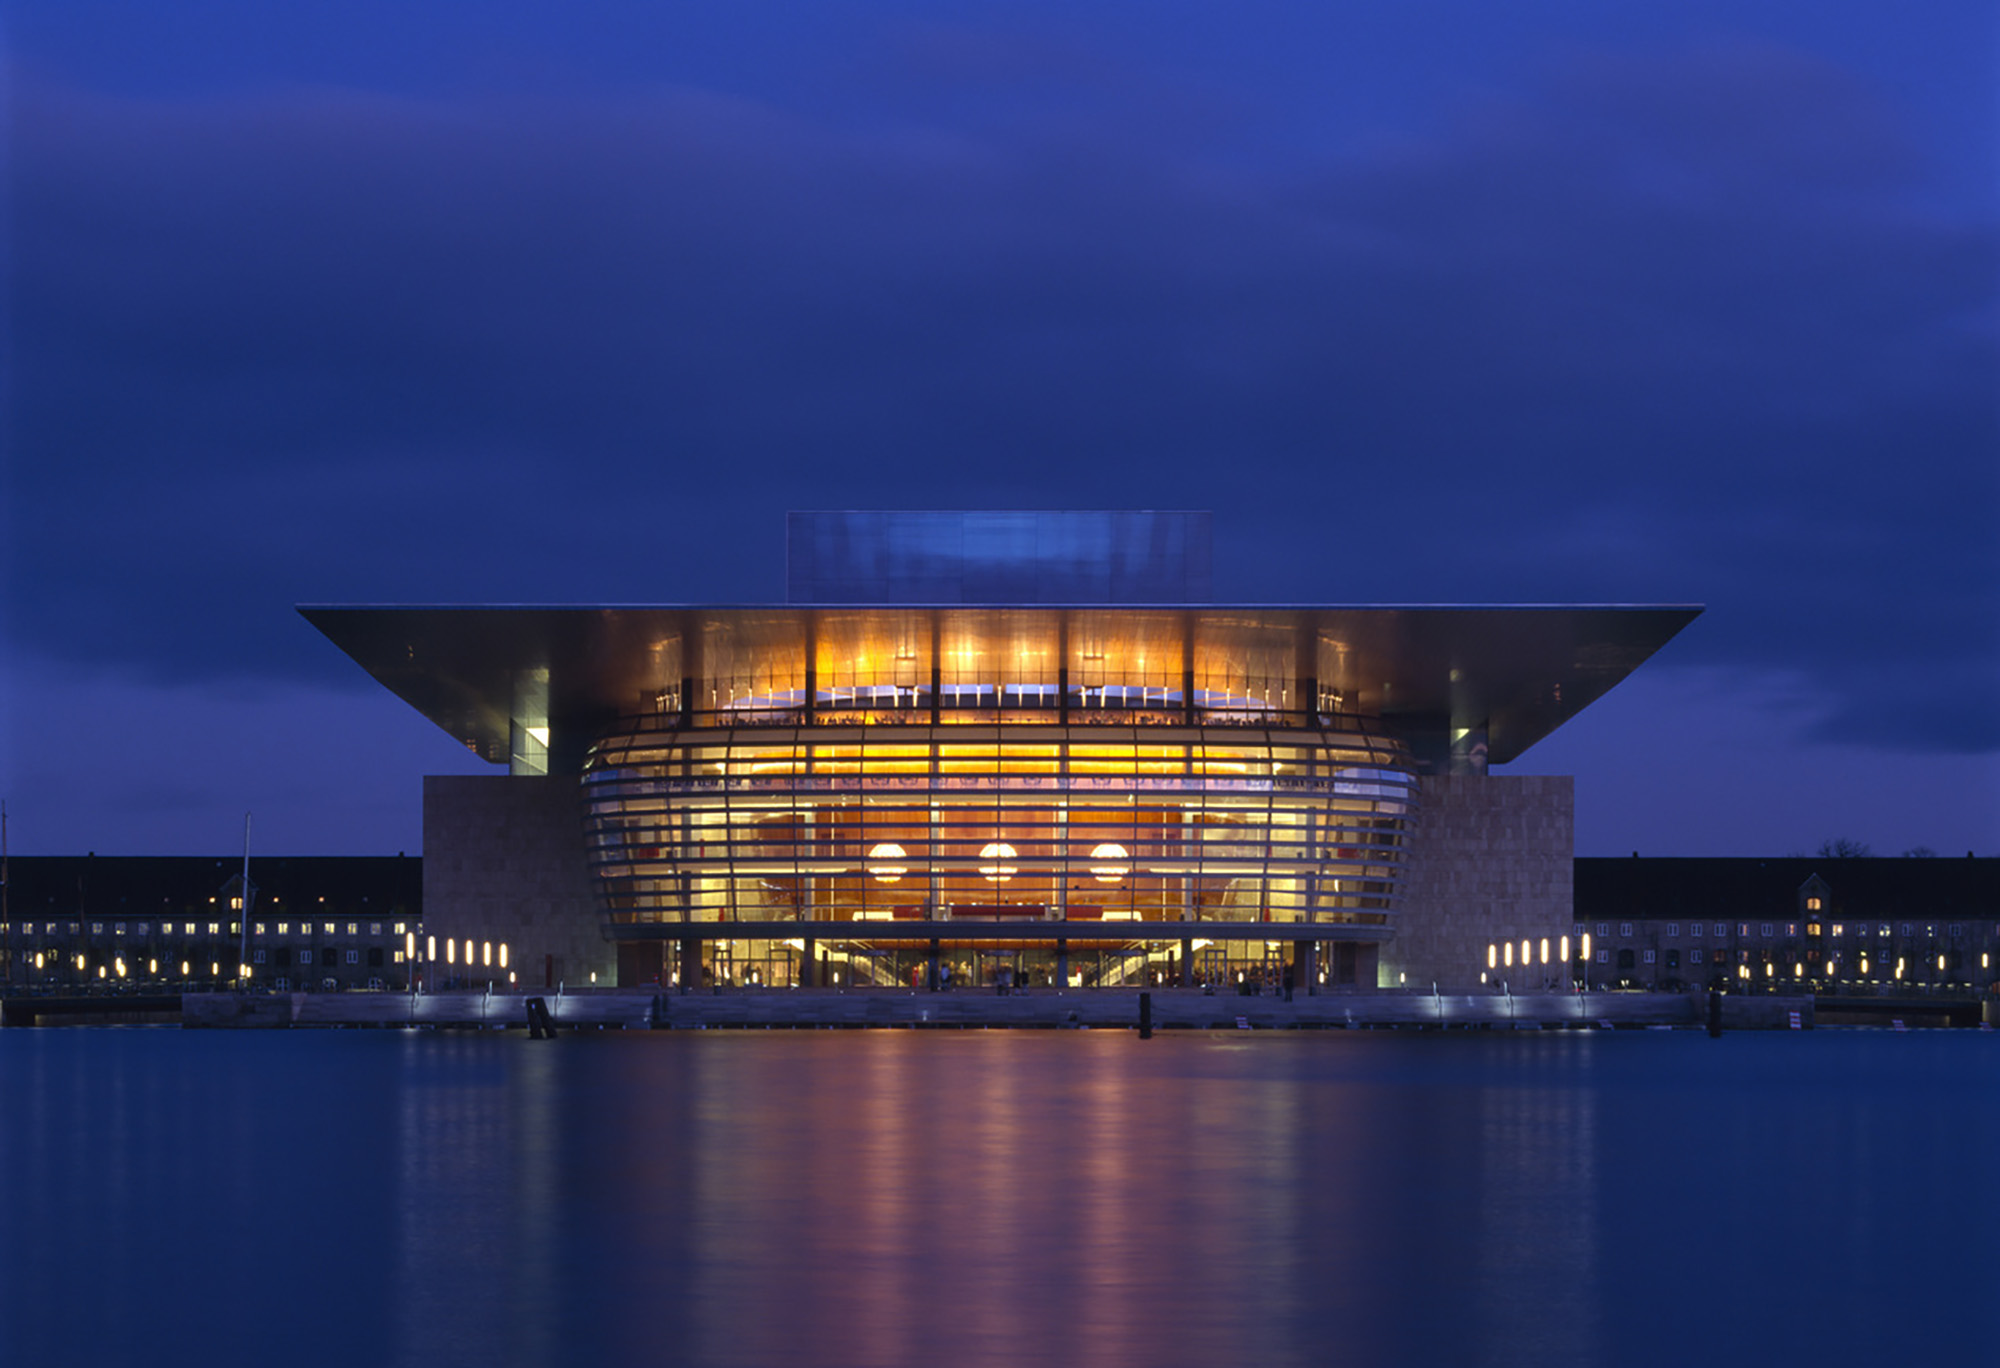 The Royal Danish Opera design by Henning Larsen